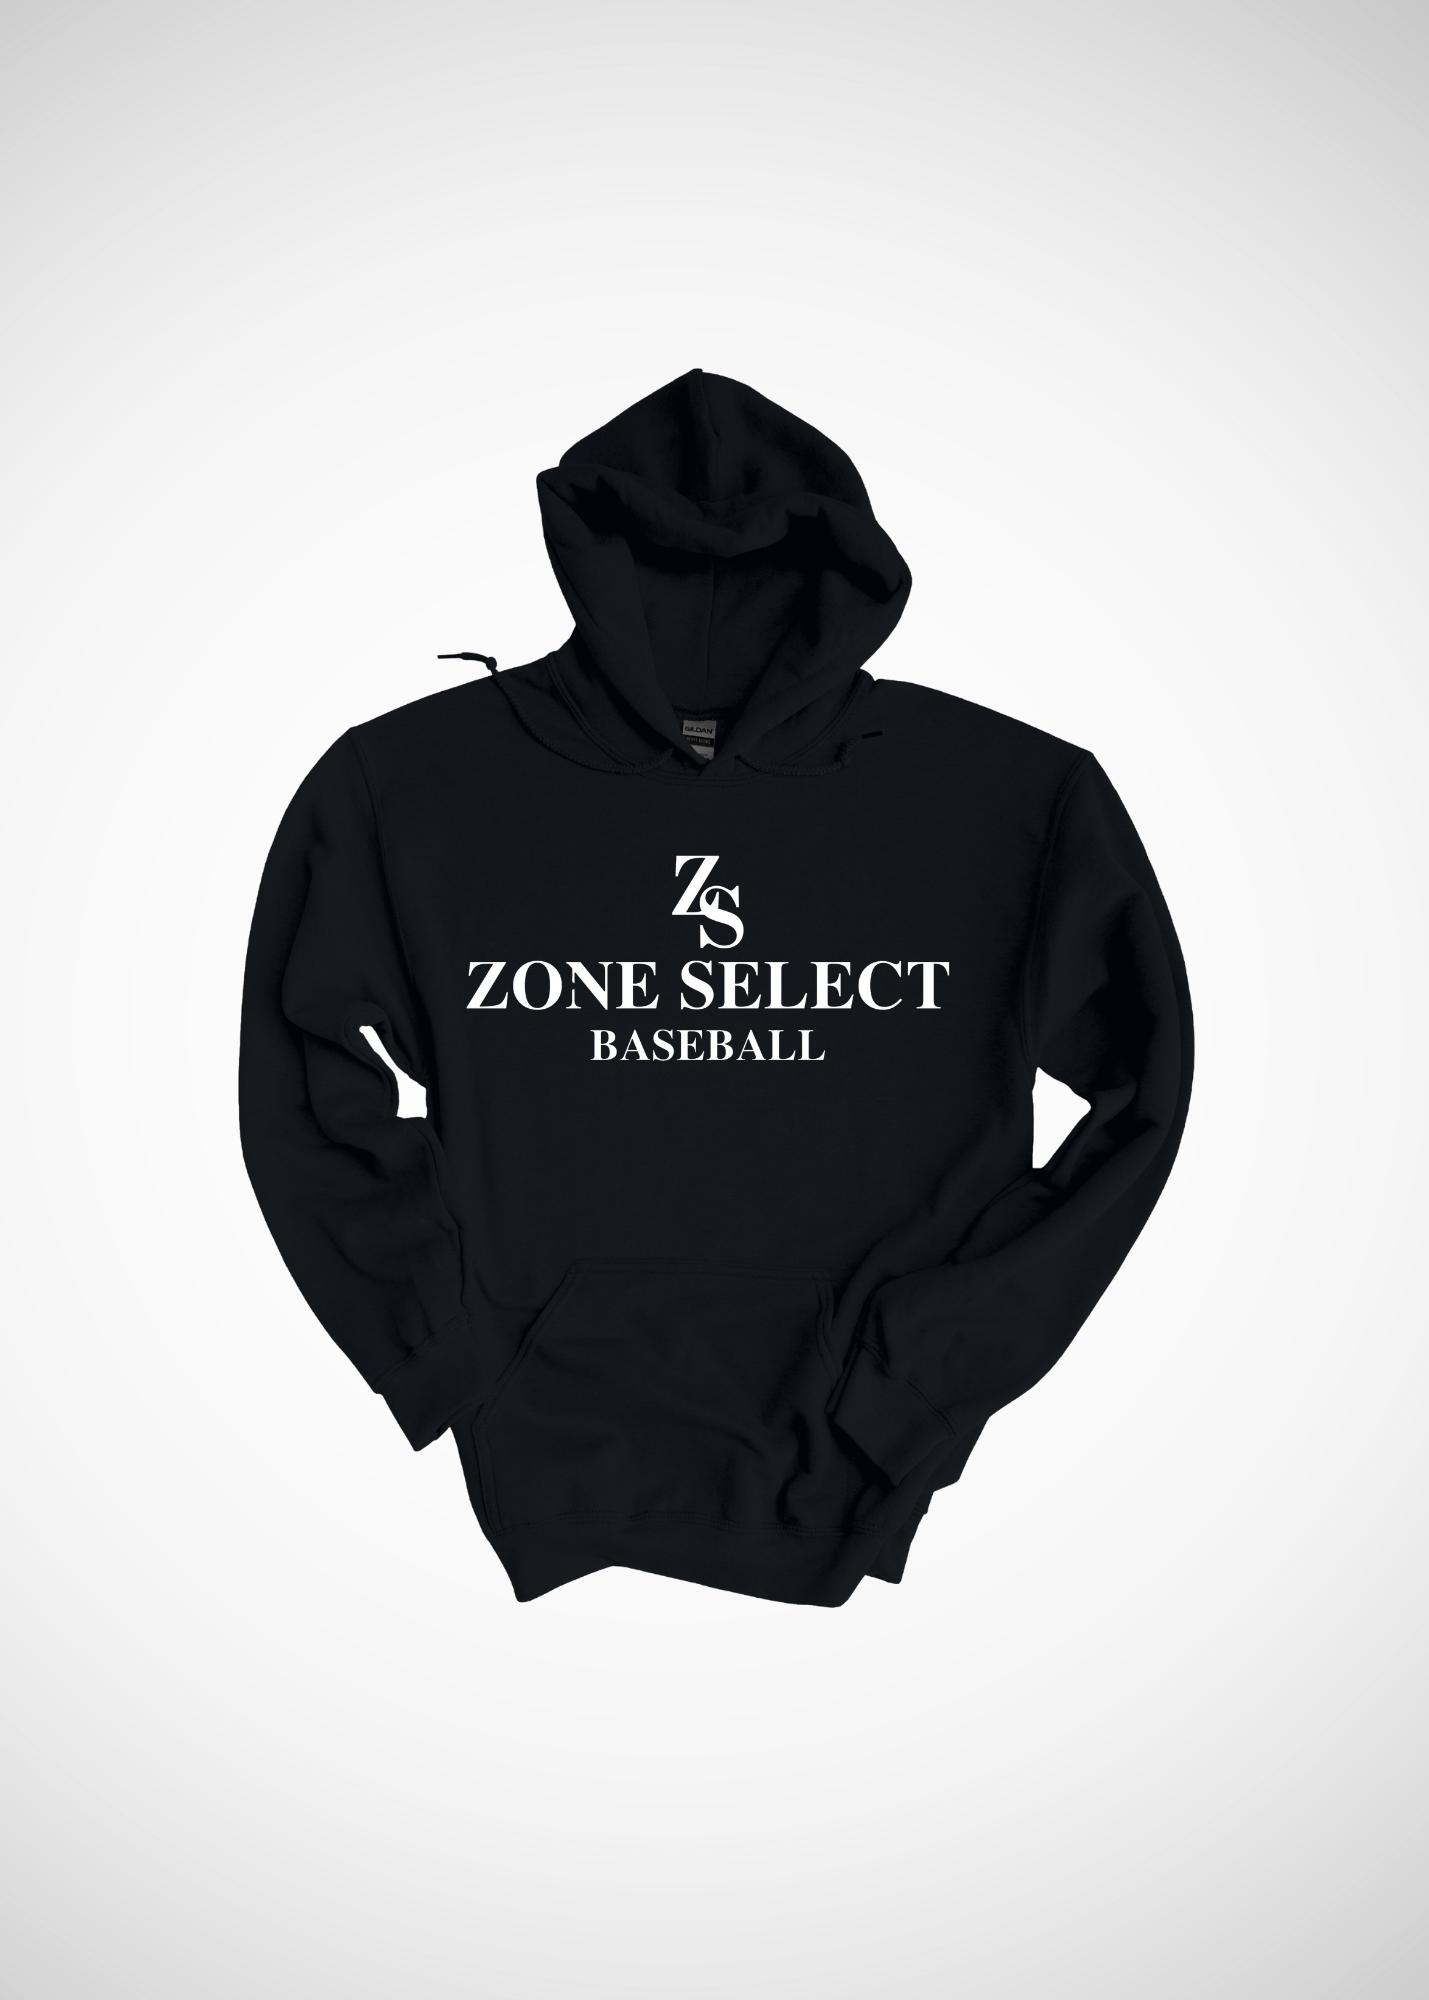 Strike Zone Hoodie - Zone Select - Premium Hoodie from Ninez Designz - Just $35! Shop now at Ninez Designz